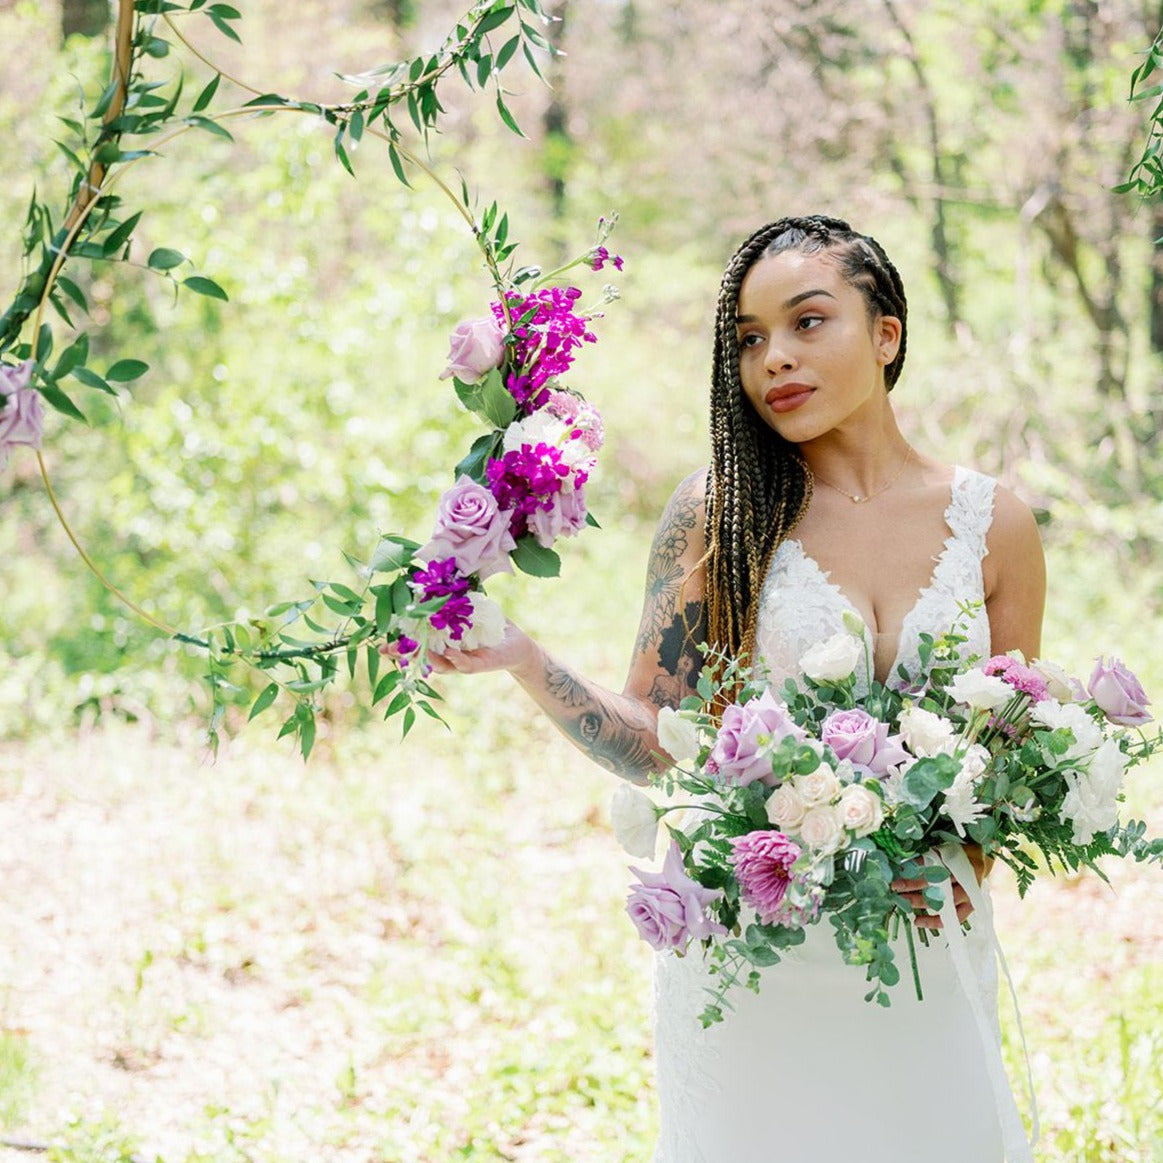 DIY Wedding Flowers - Elegant White